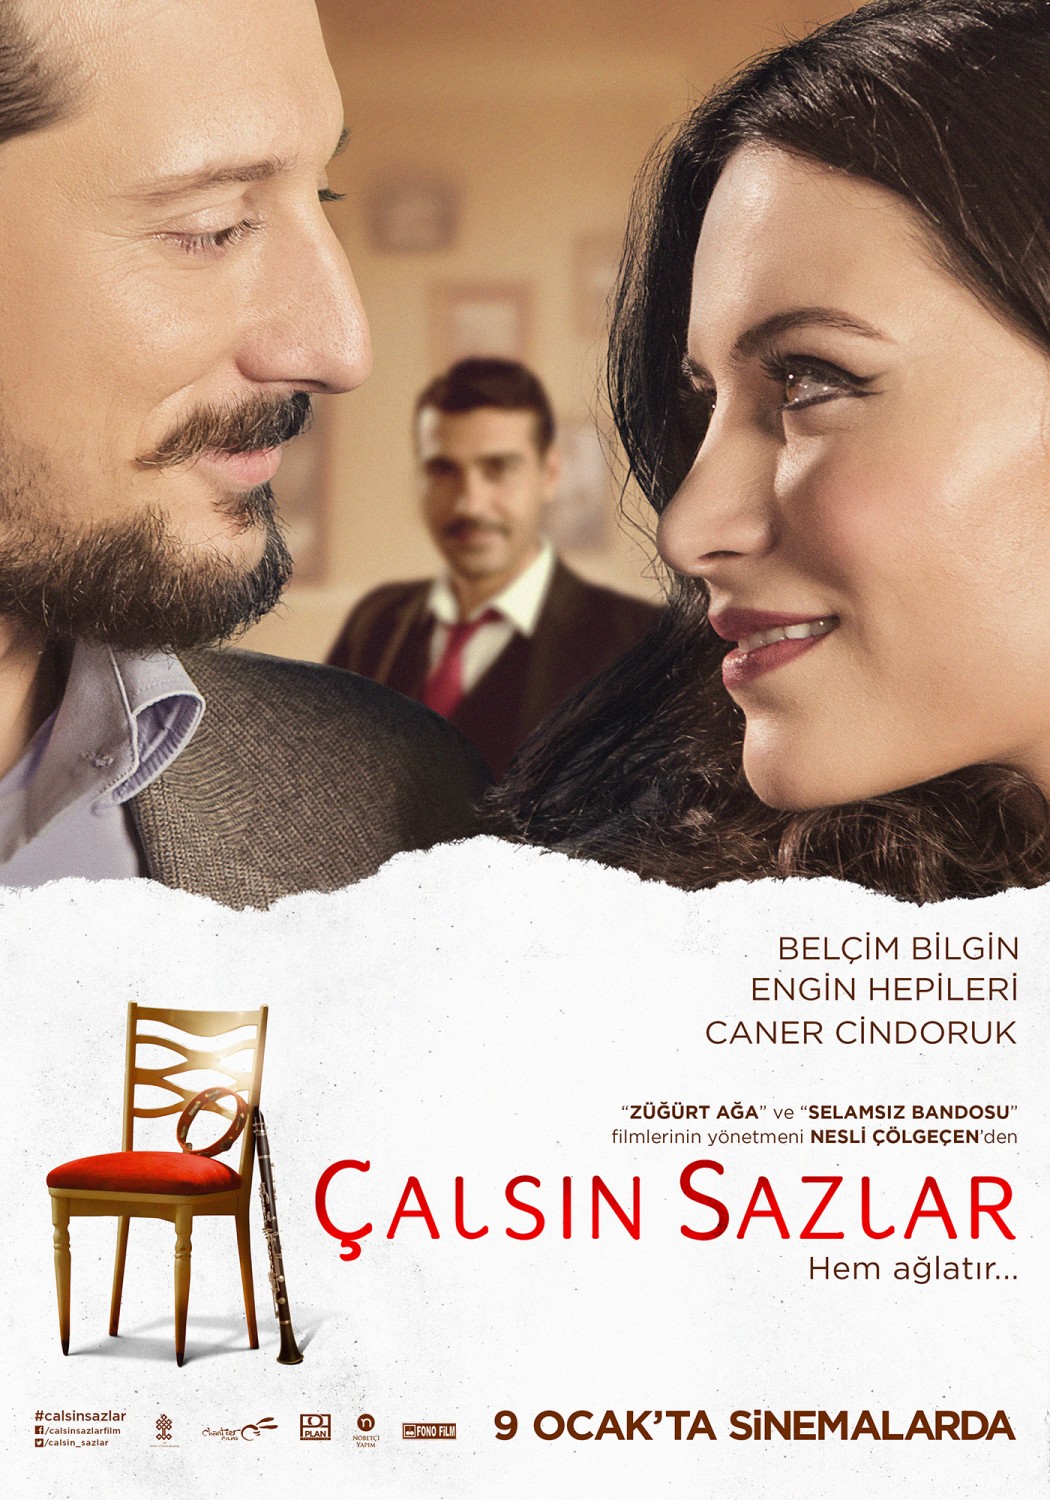 Extra Large Movie Poster Image for Çalsin Sazlar (#2 of 4)